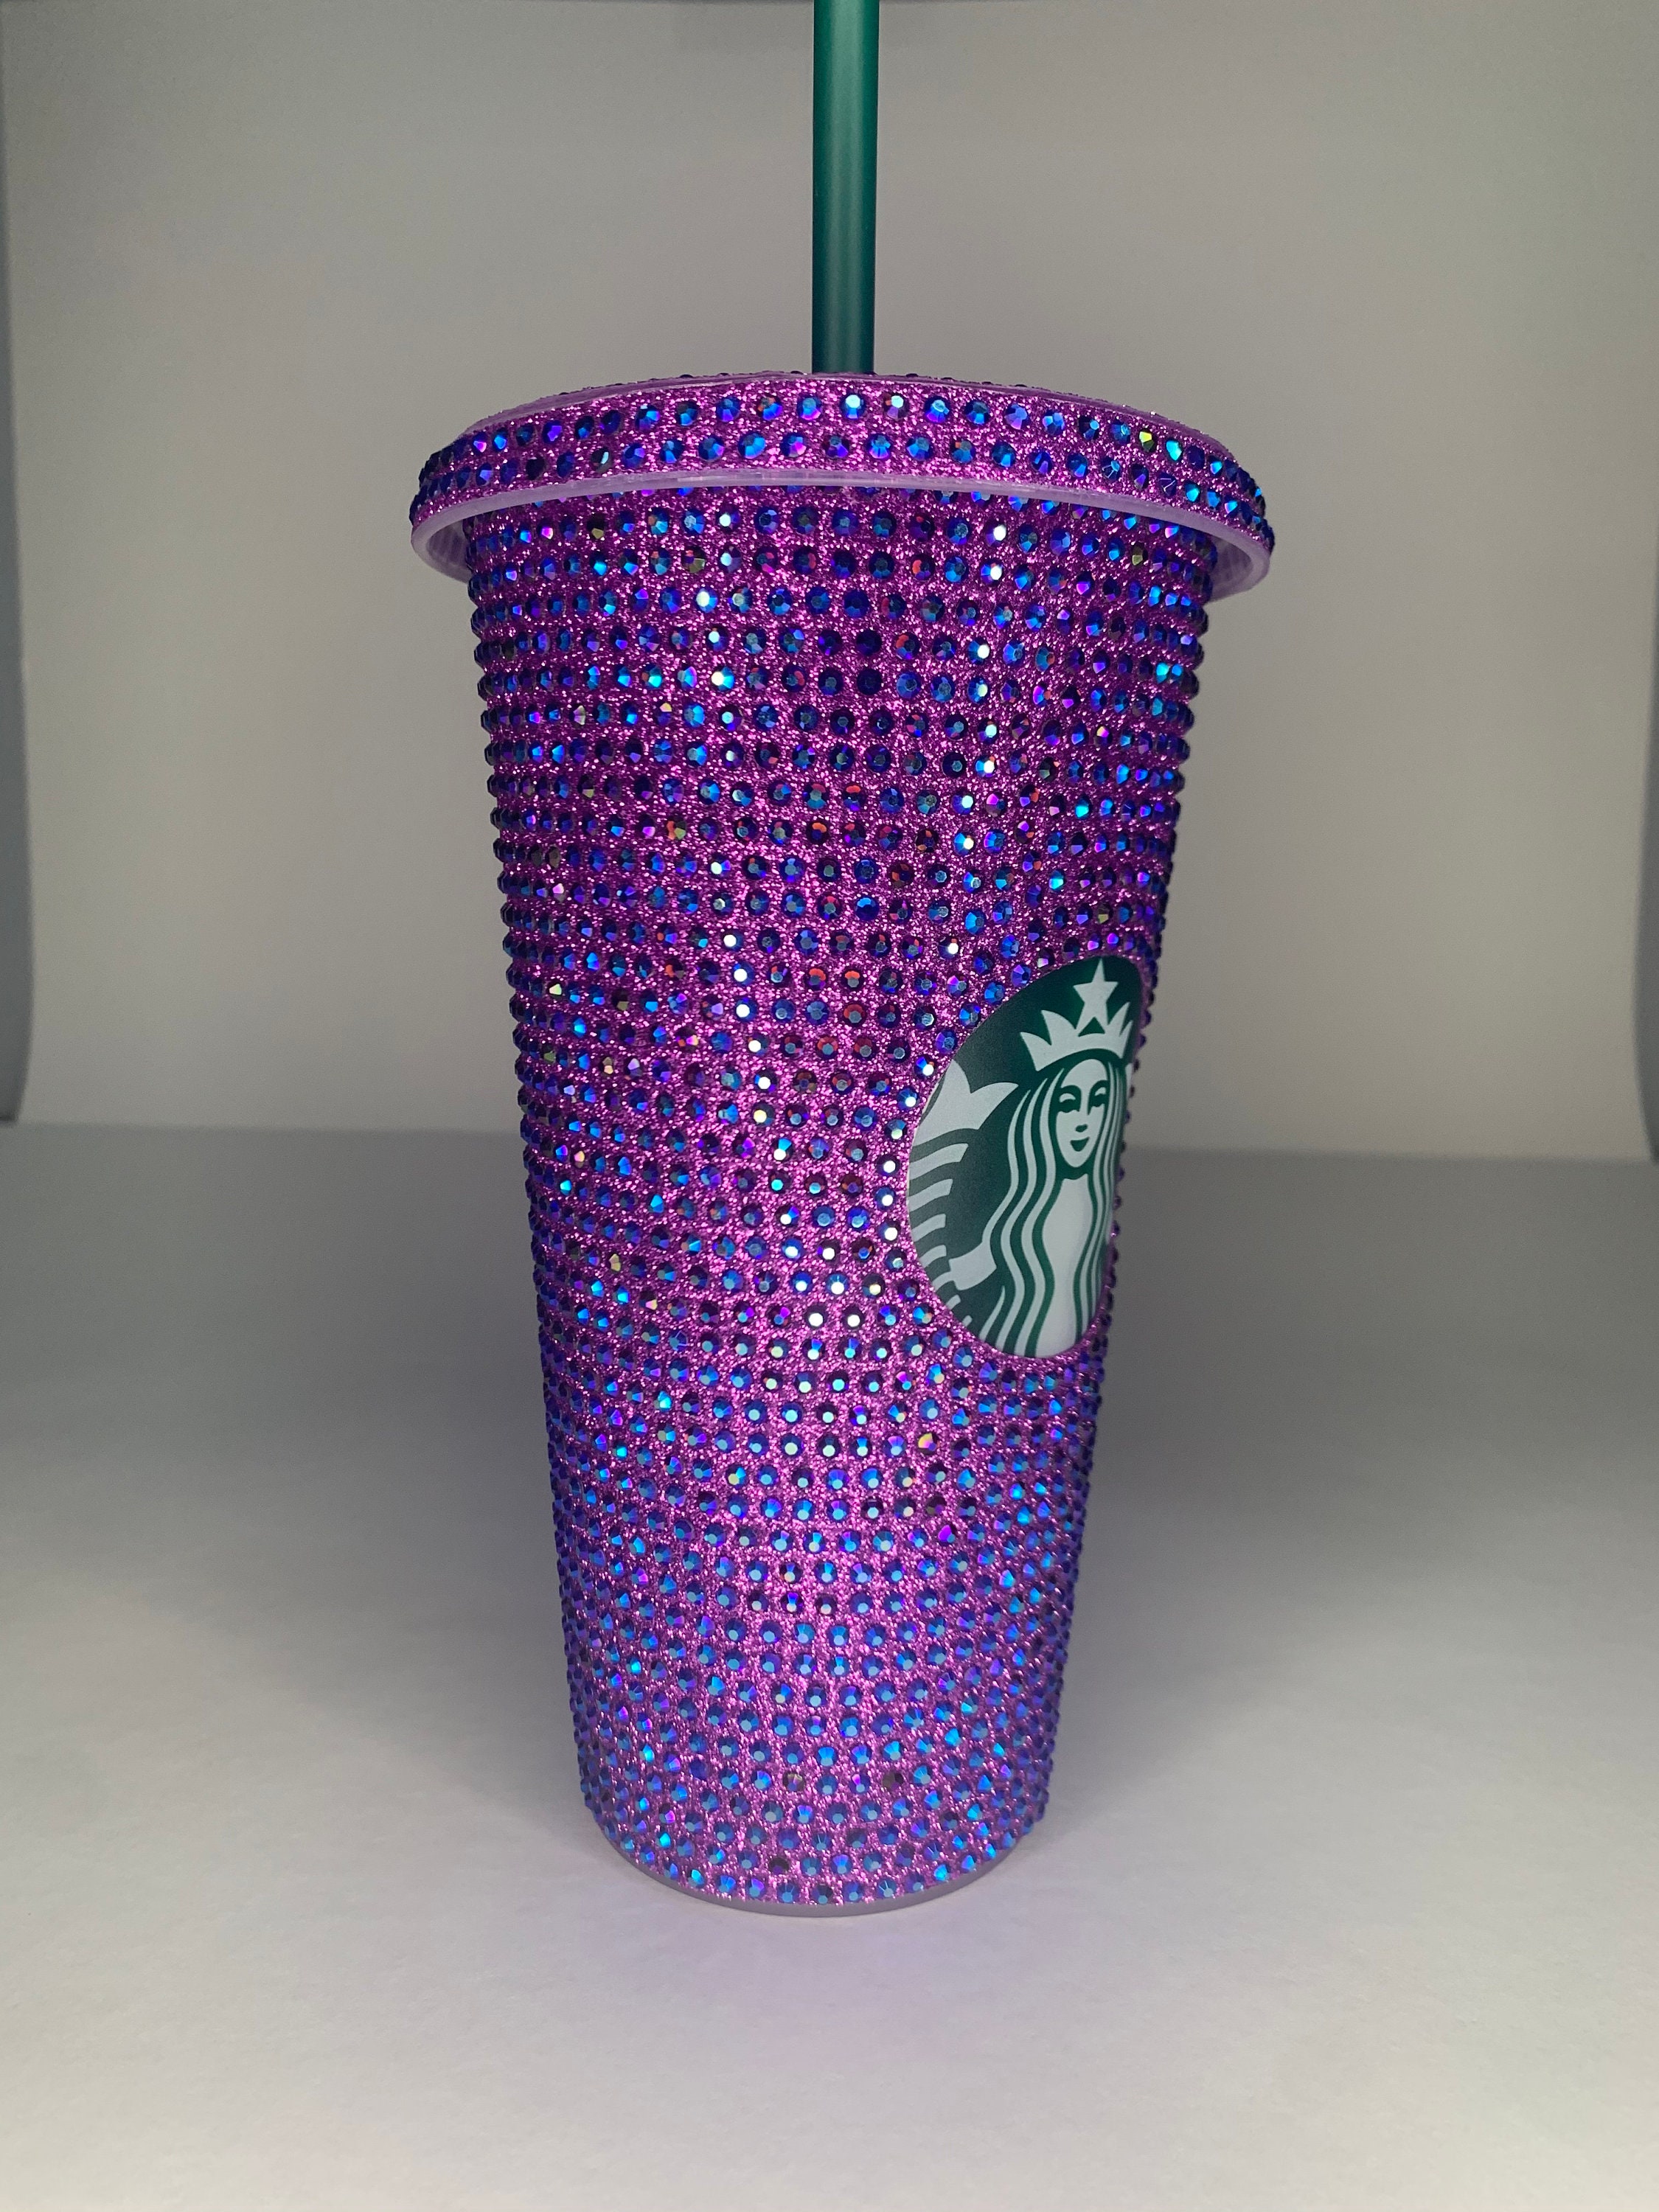 Starbucks Purple Matte Diamond Studded Tumbler Cold Drinks Straw Cups 24oz  Gifts